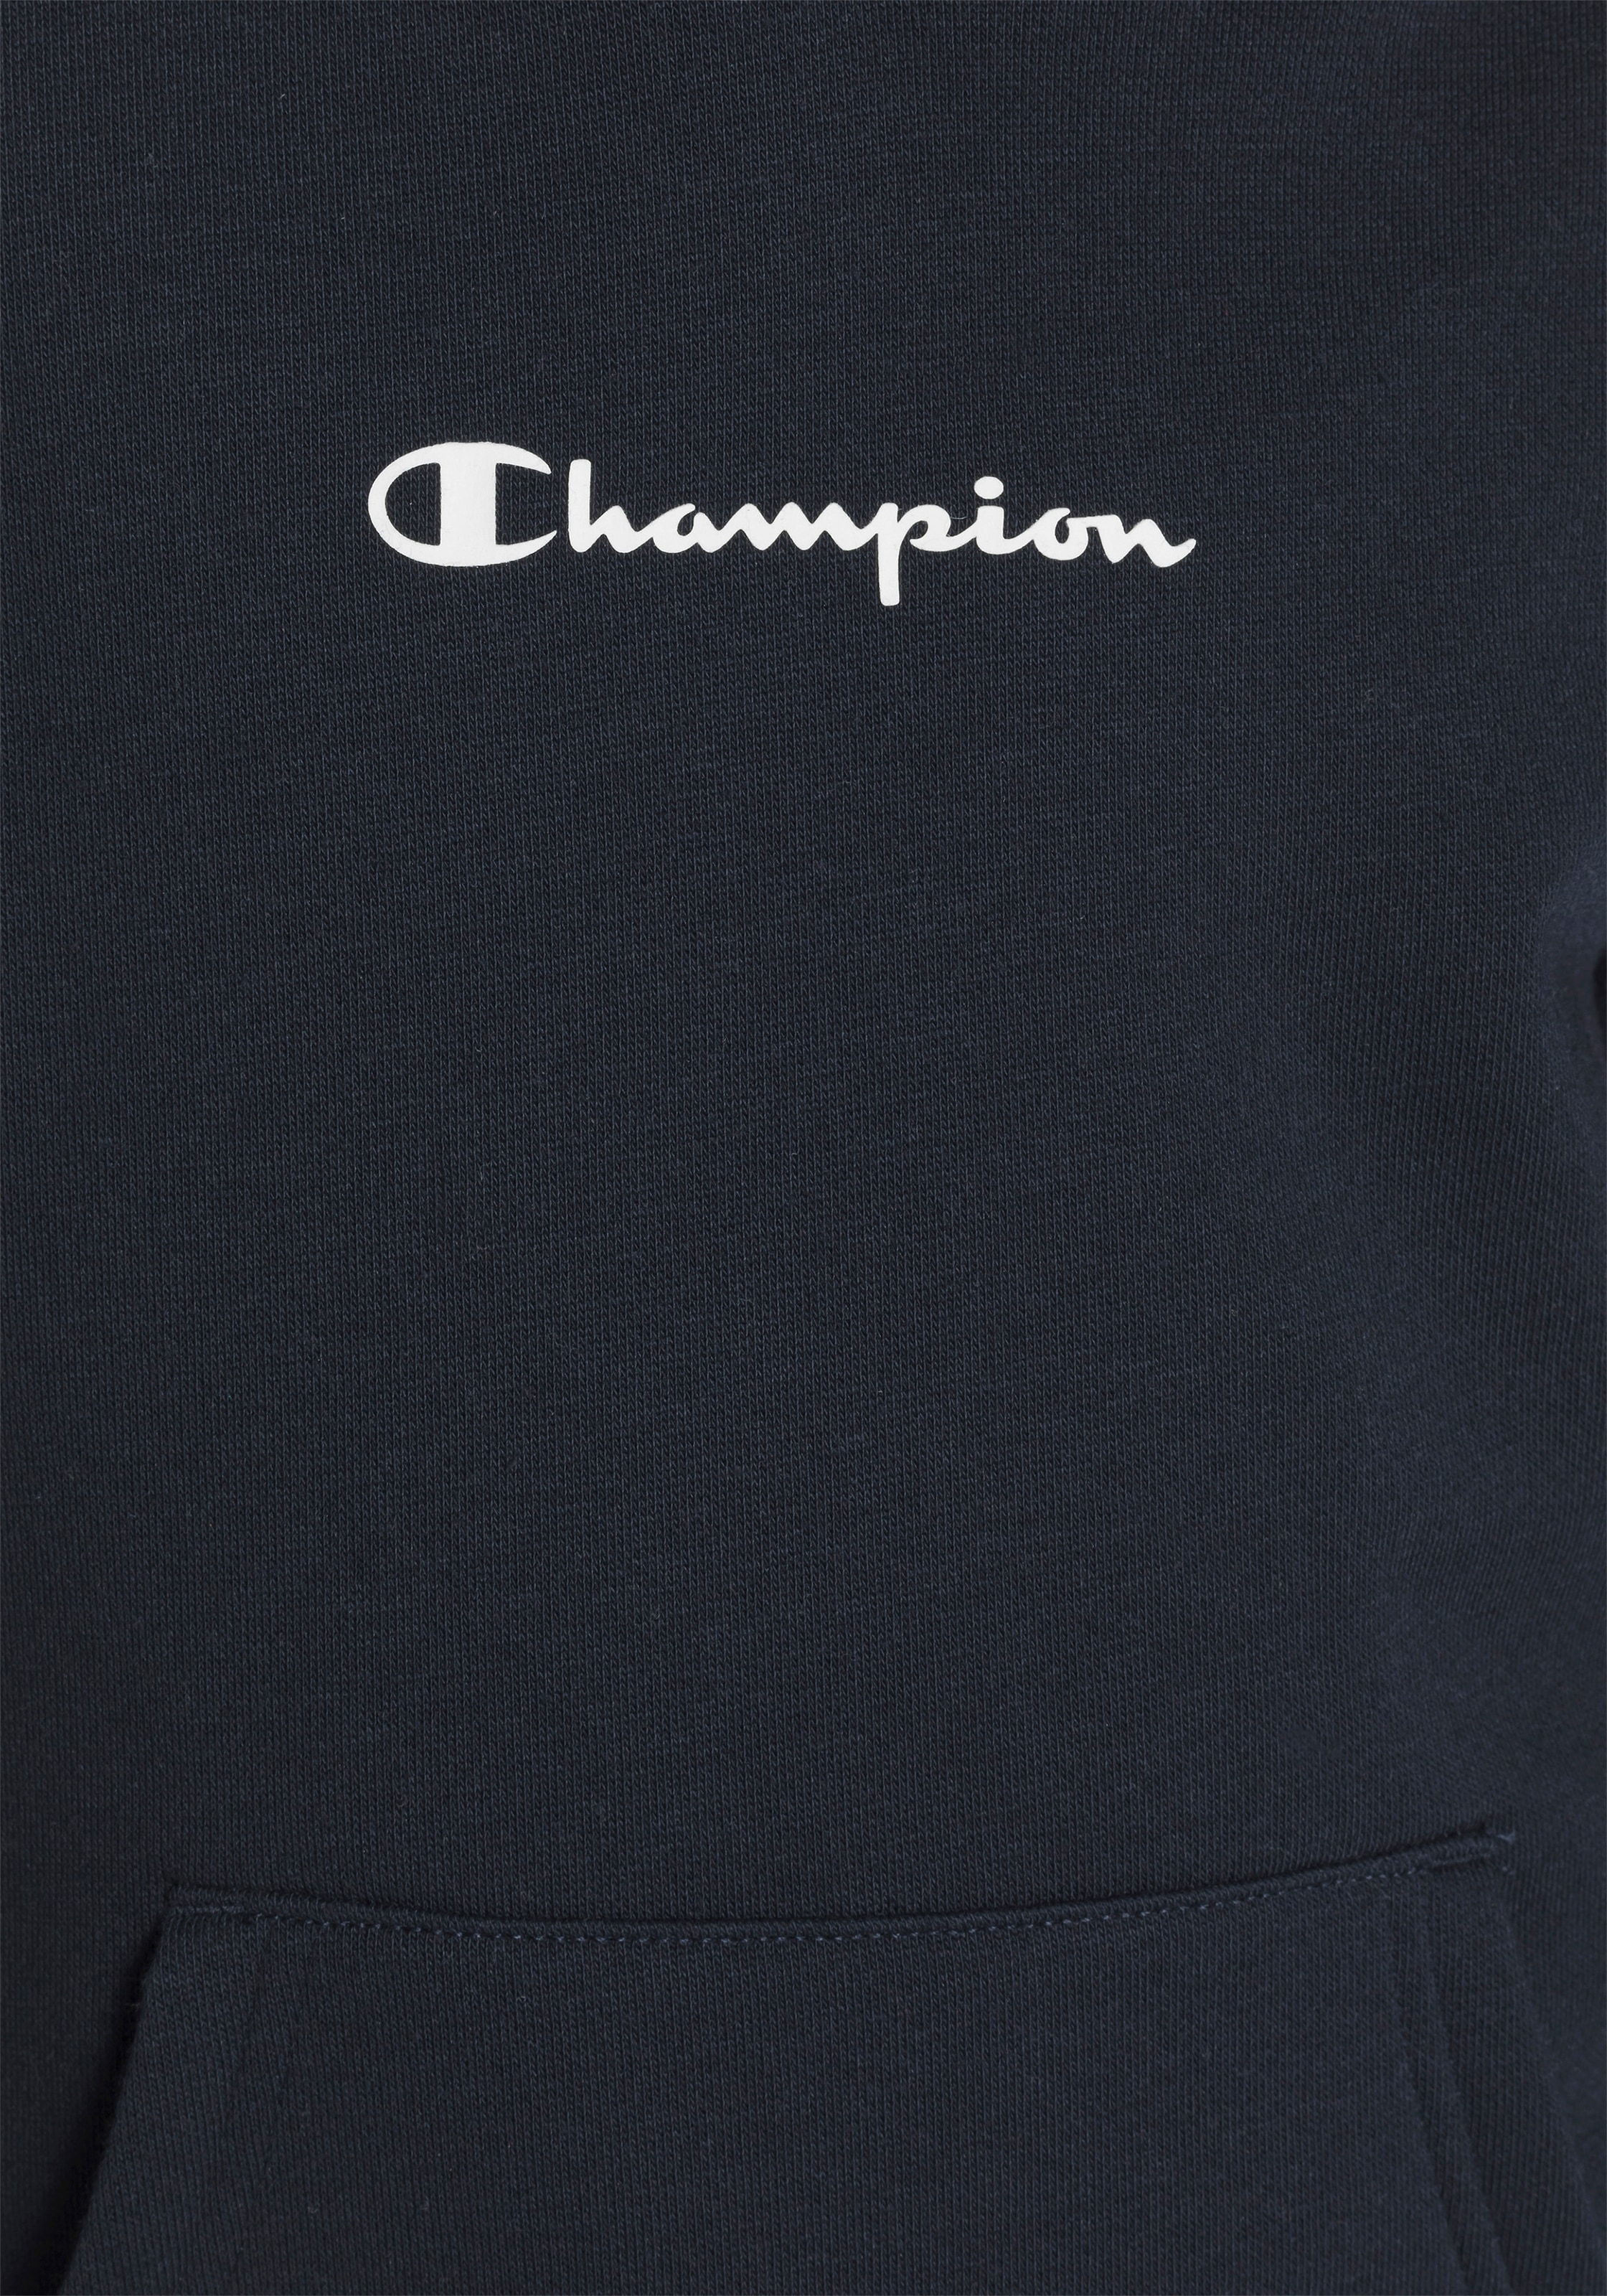 Champion Kapuzensweatshirt